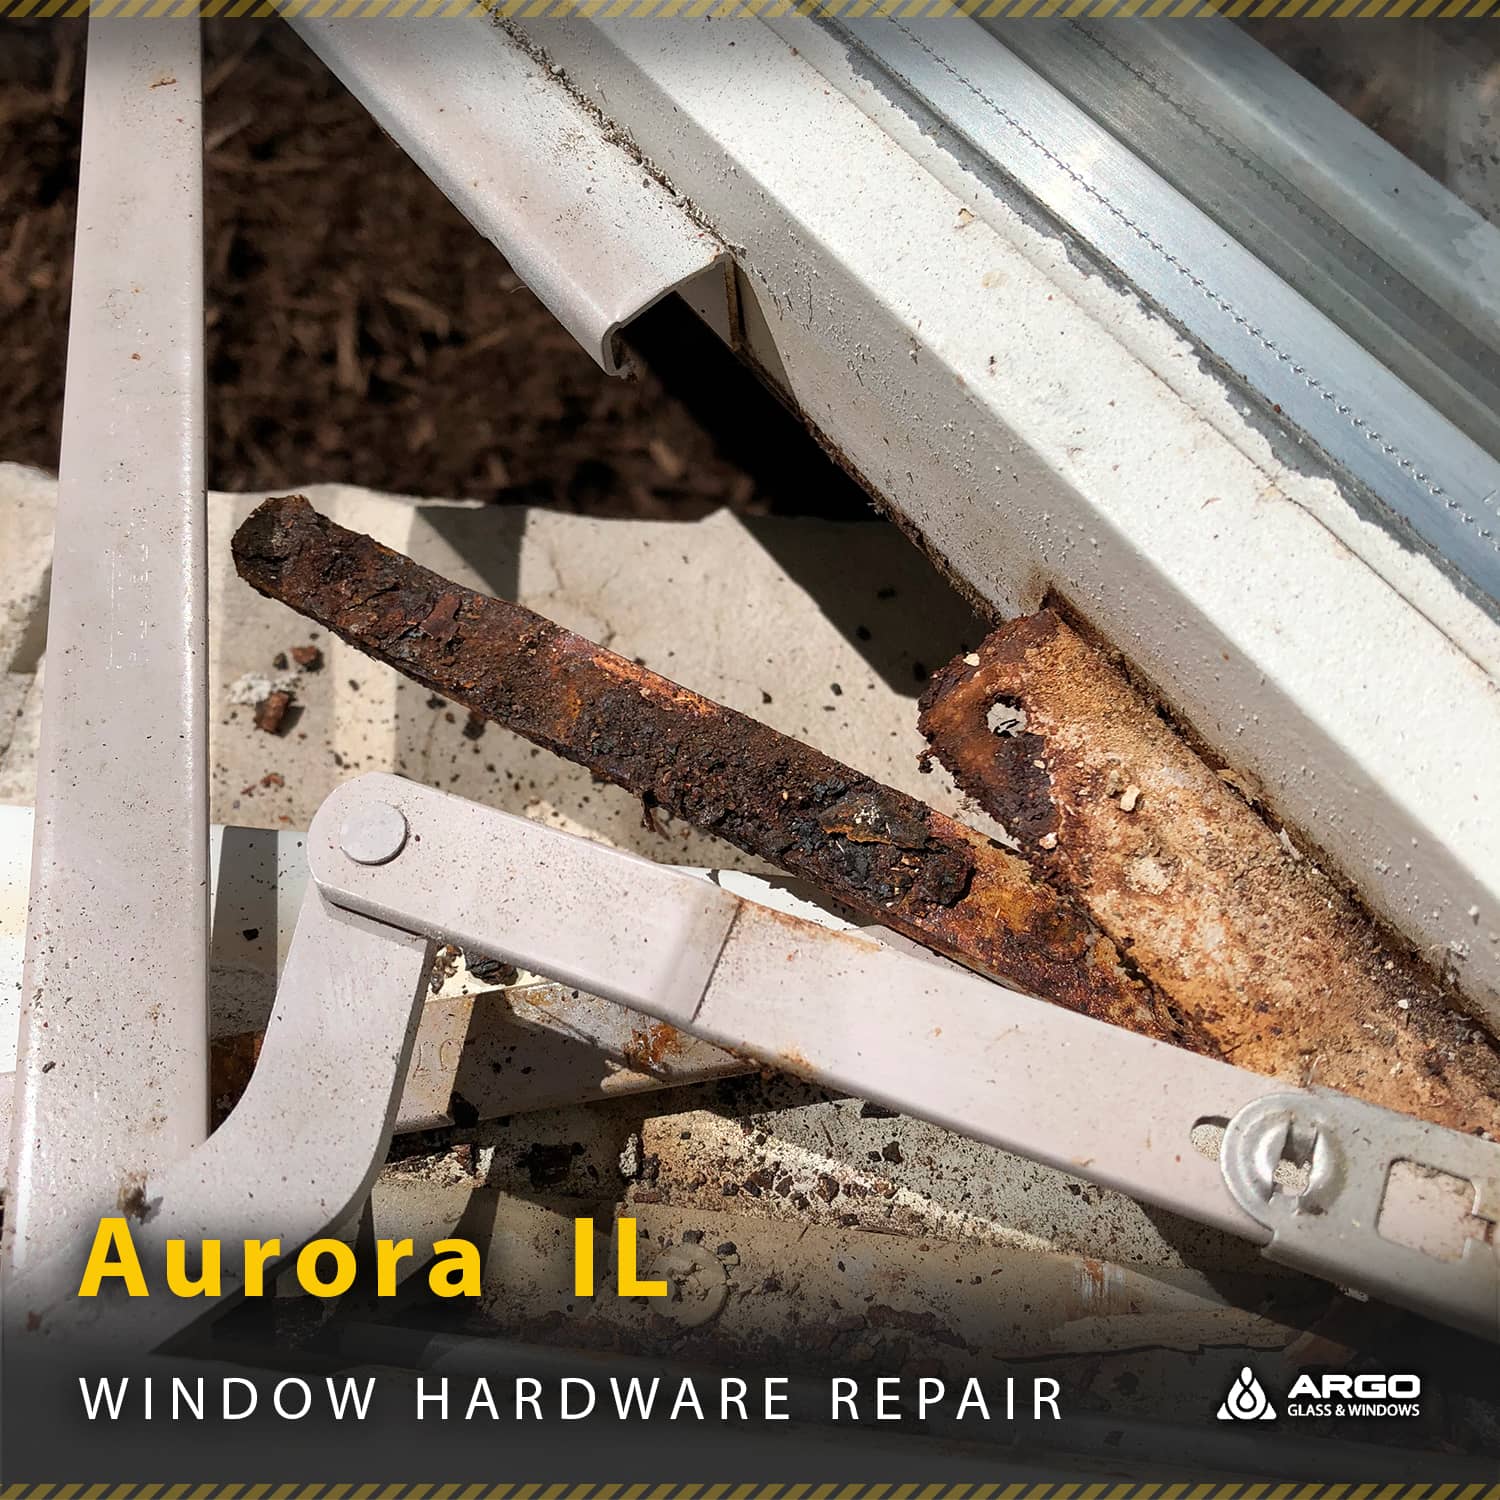 Professional Window Hardware Repair company